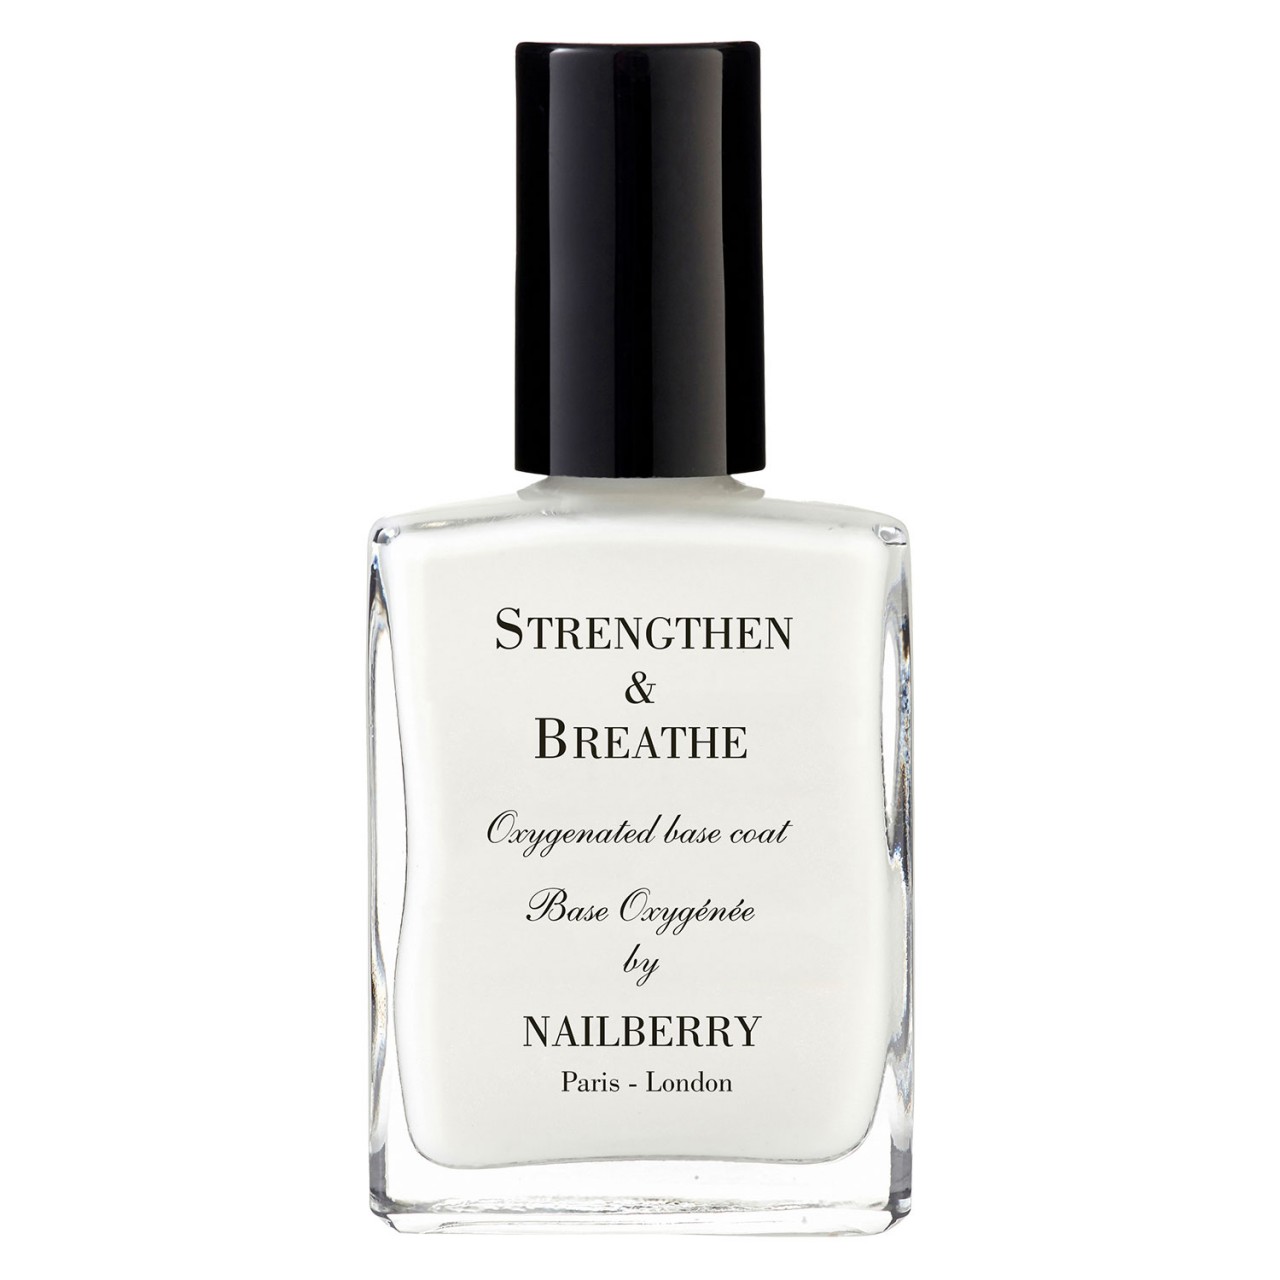 L'oxygéné Nail Care - Strengthen & Breathe von Nailberry